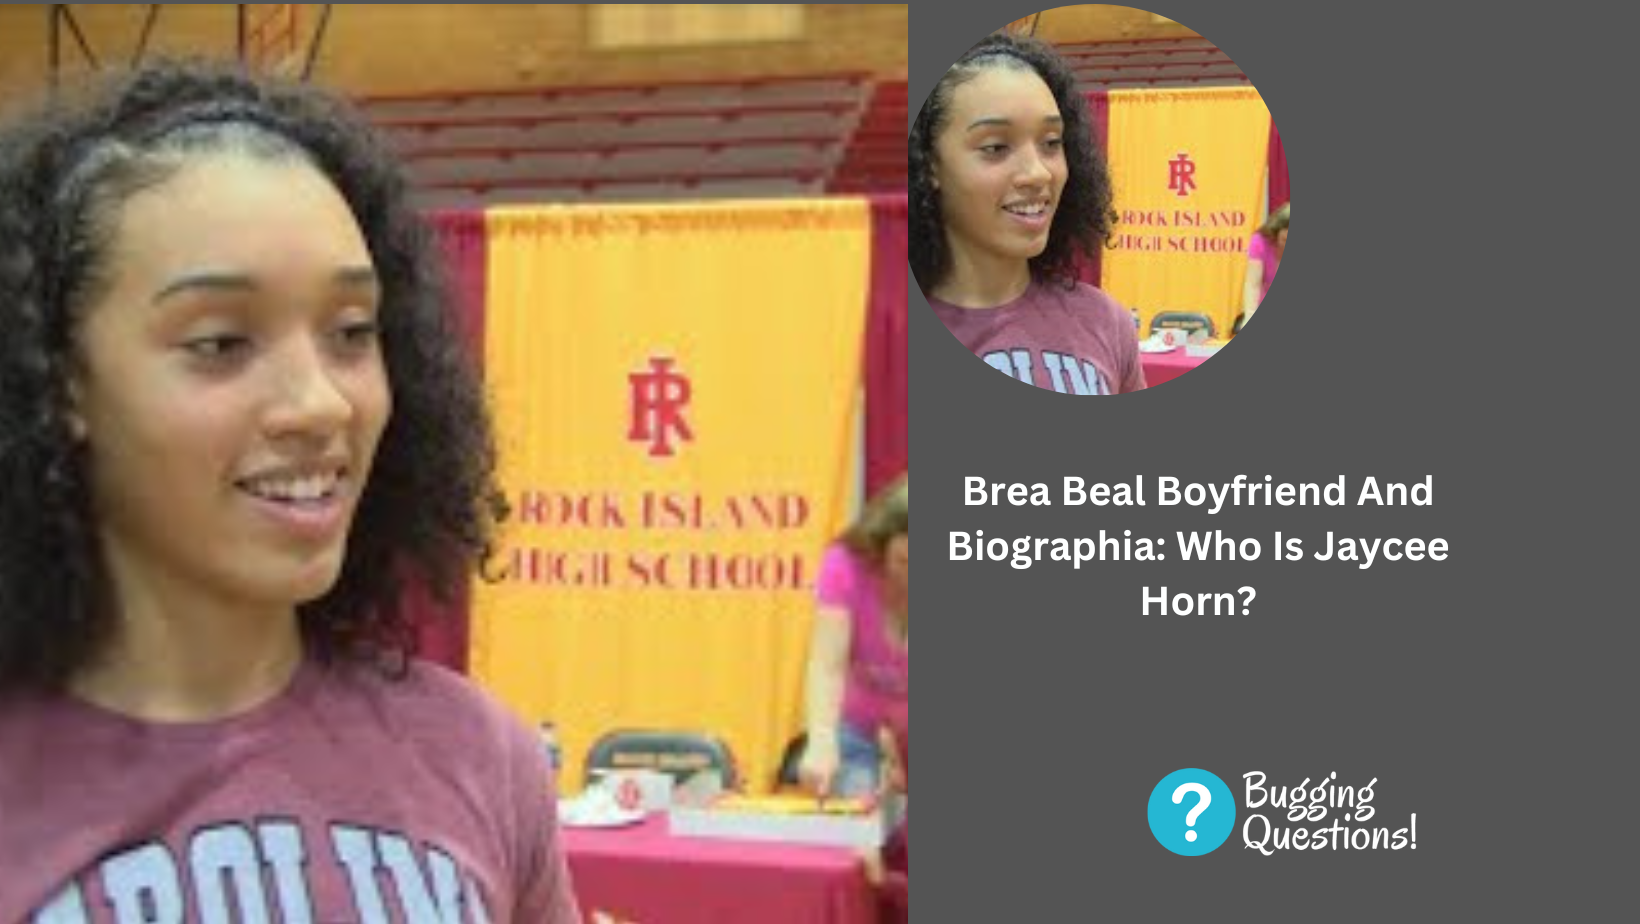 Brea Beal Boyfriend And Biographia: Who Is Jaycee Horn?